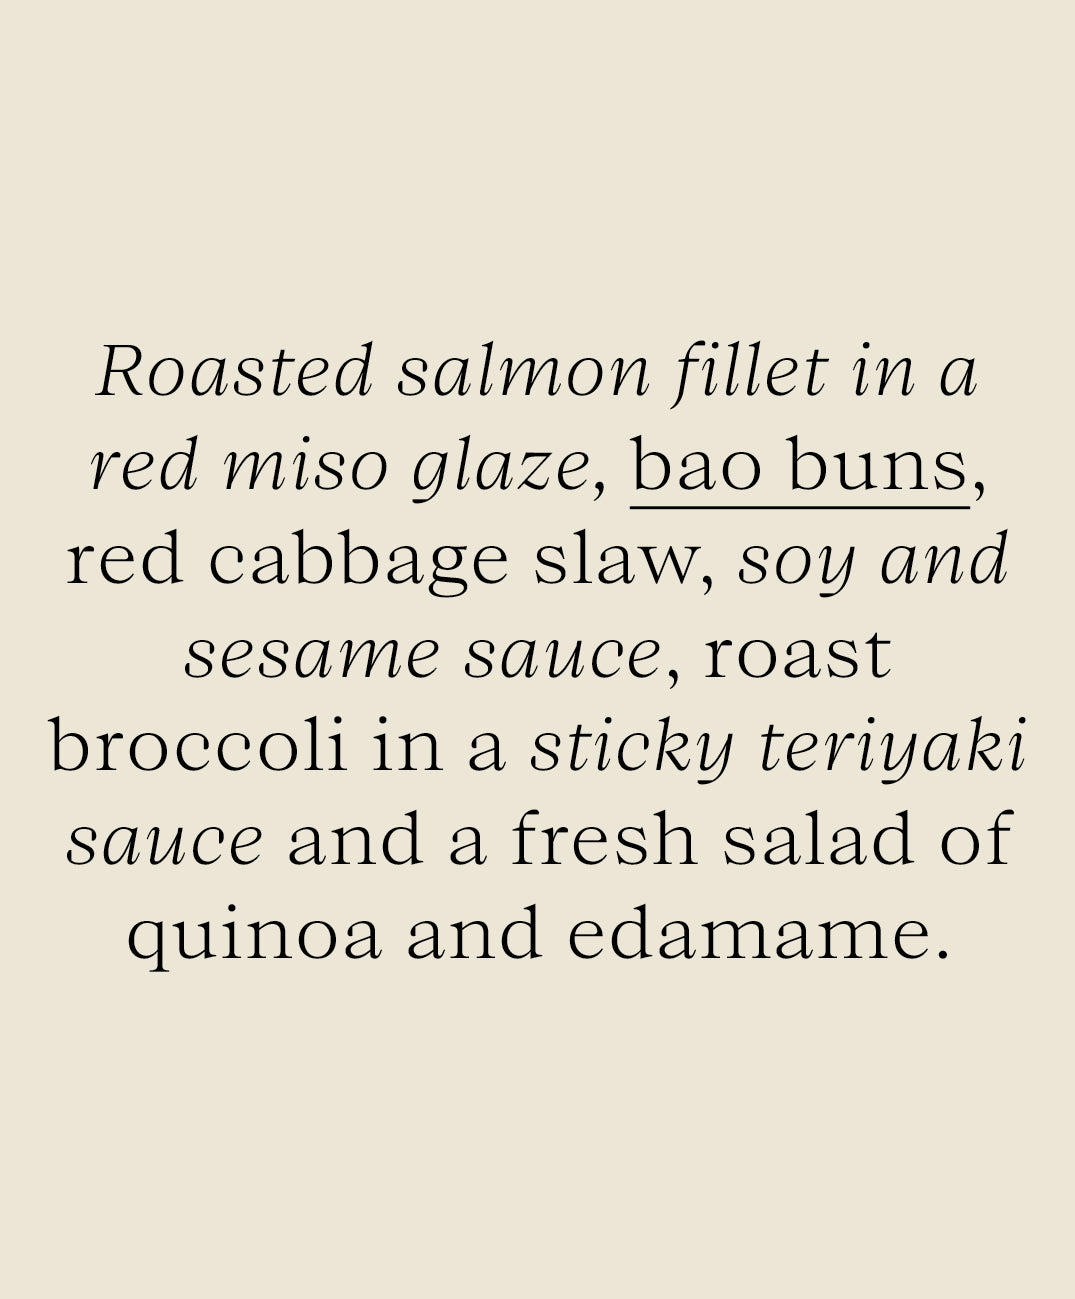 Miso Salmon & Bao Buns with Sticky Teriyaki Roast Broccoli